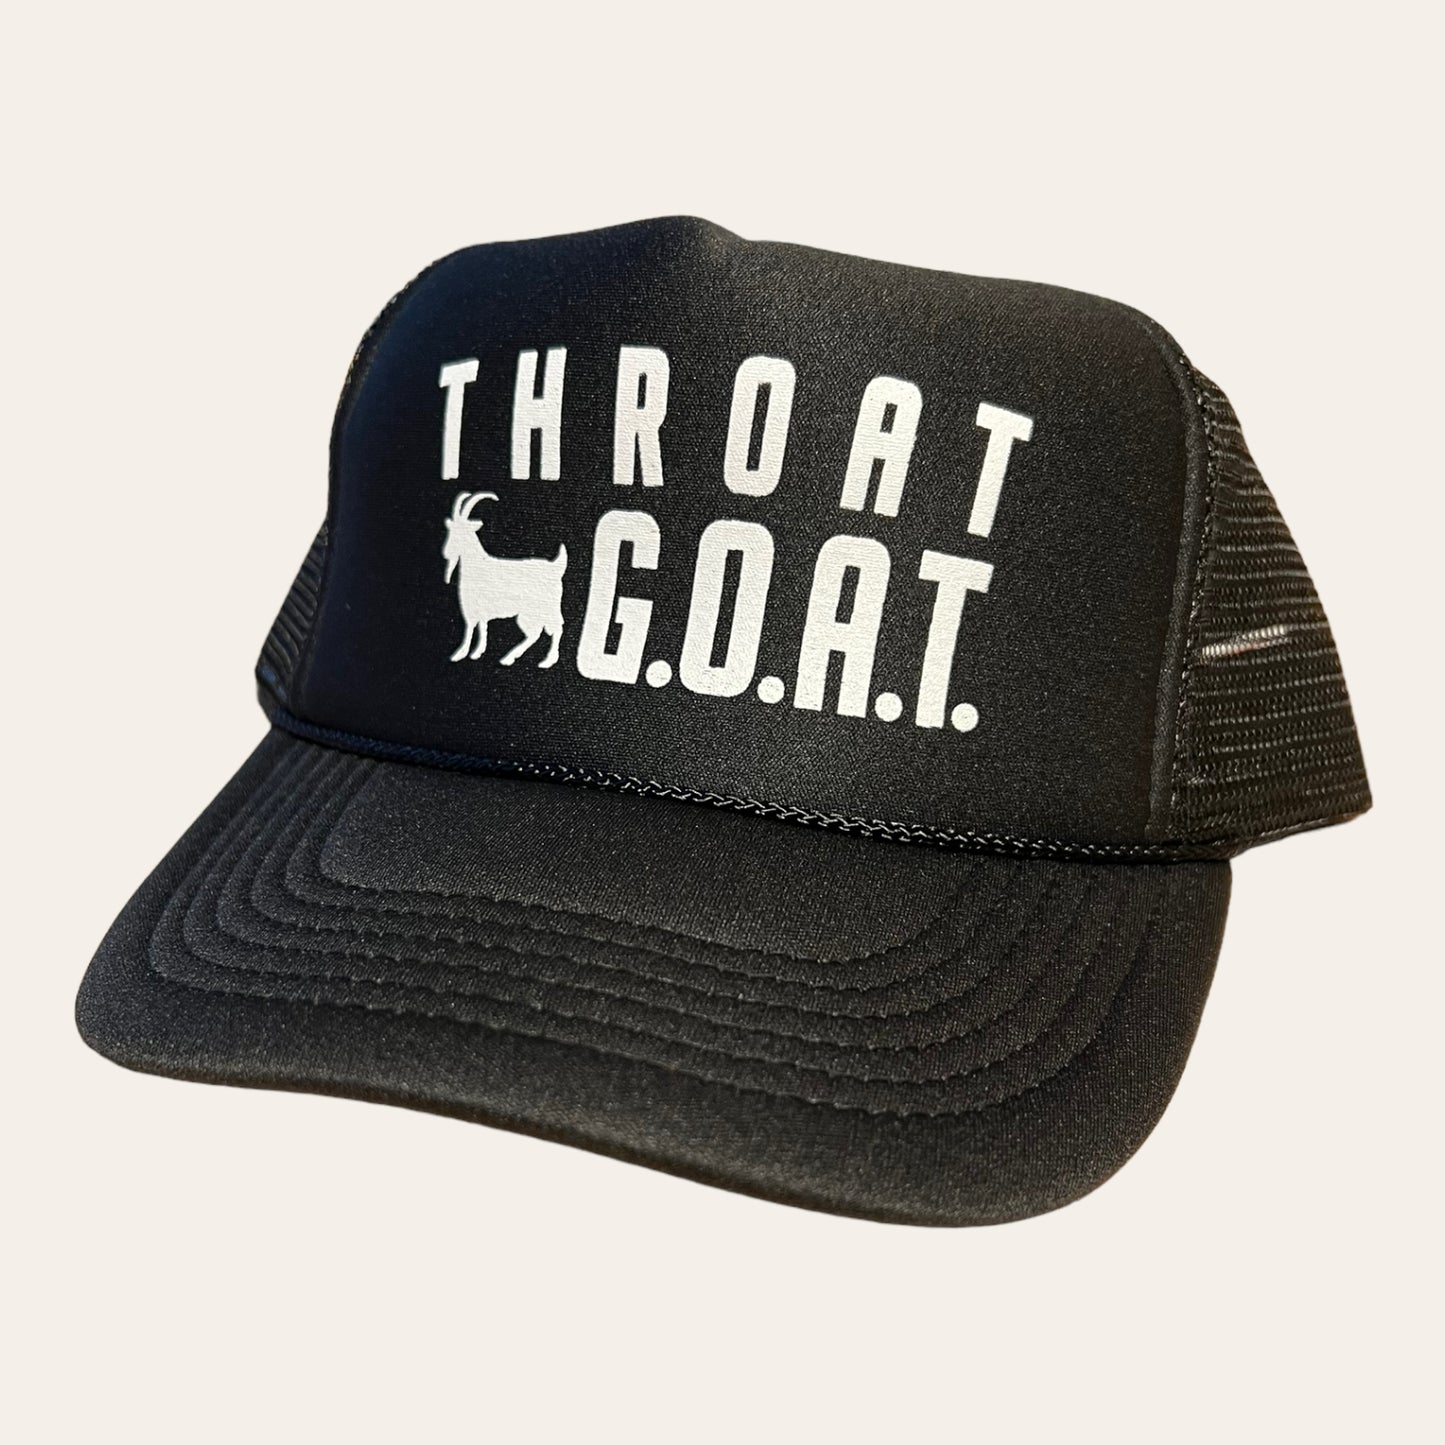 Throat GOAT Trucker Hat Funny Trucker Hat Black